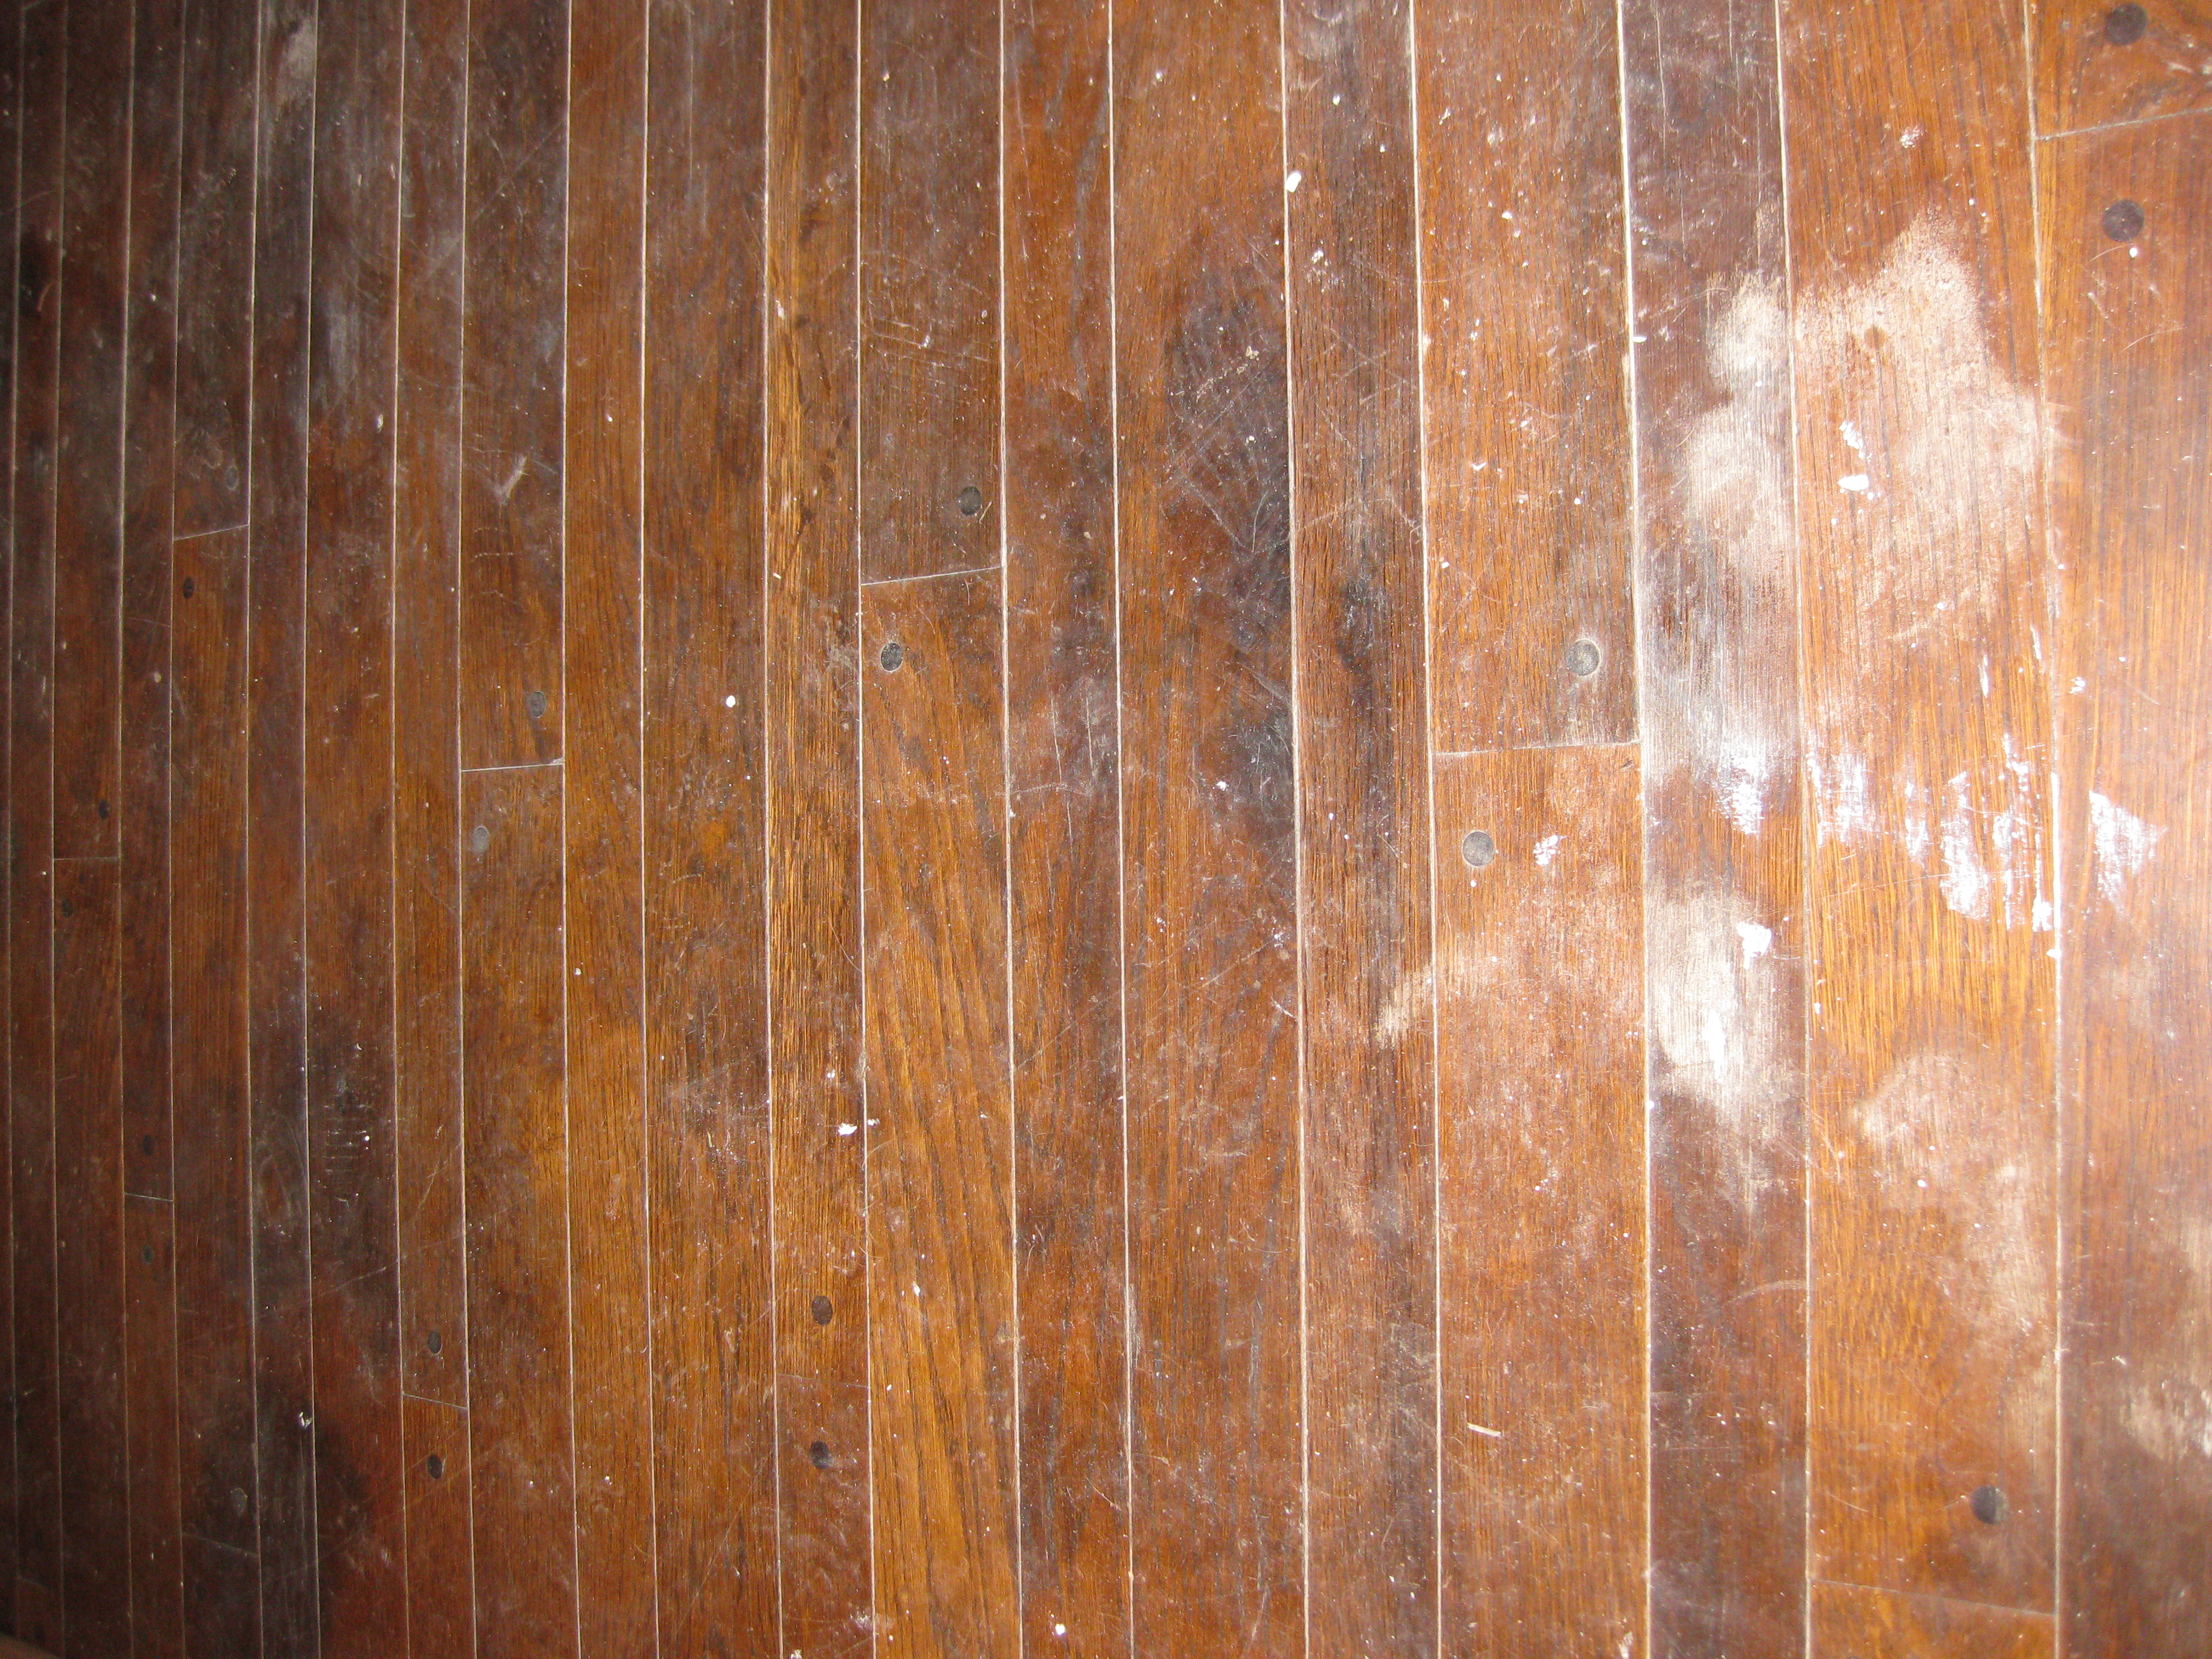 Refinish Hardwood Floors Priceplace